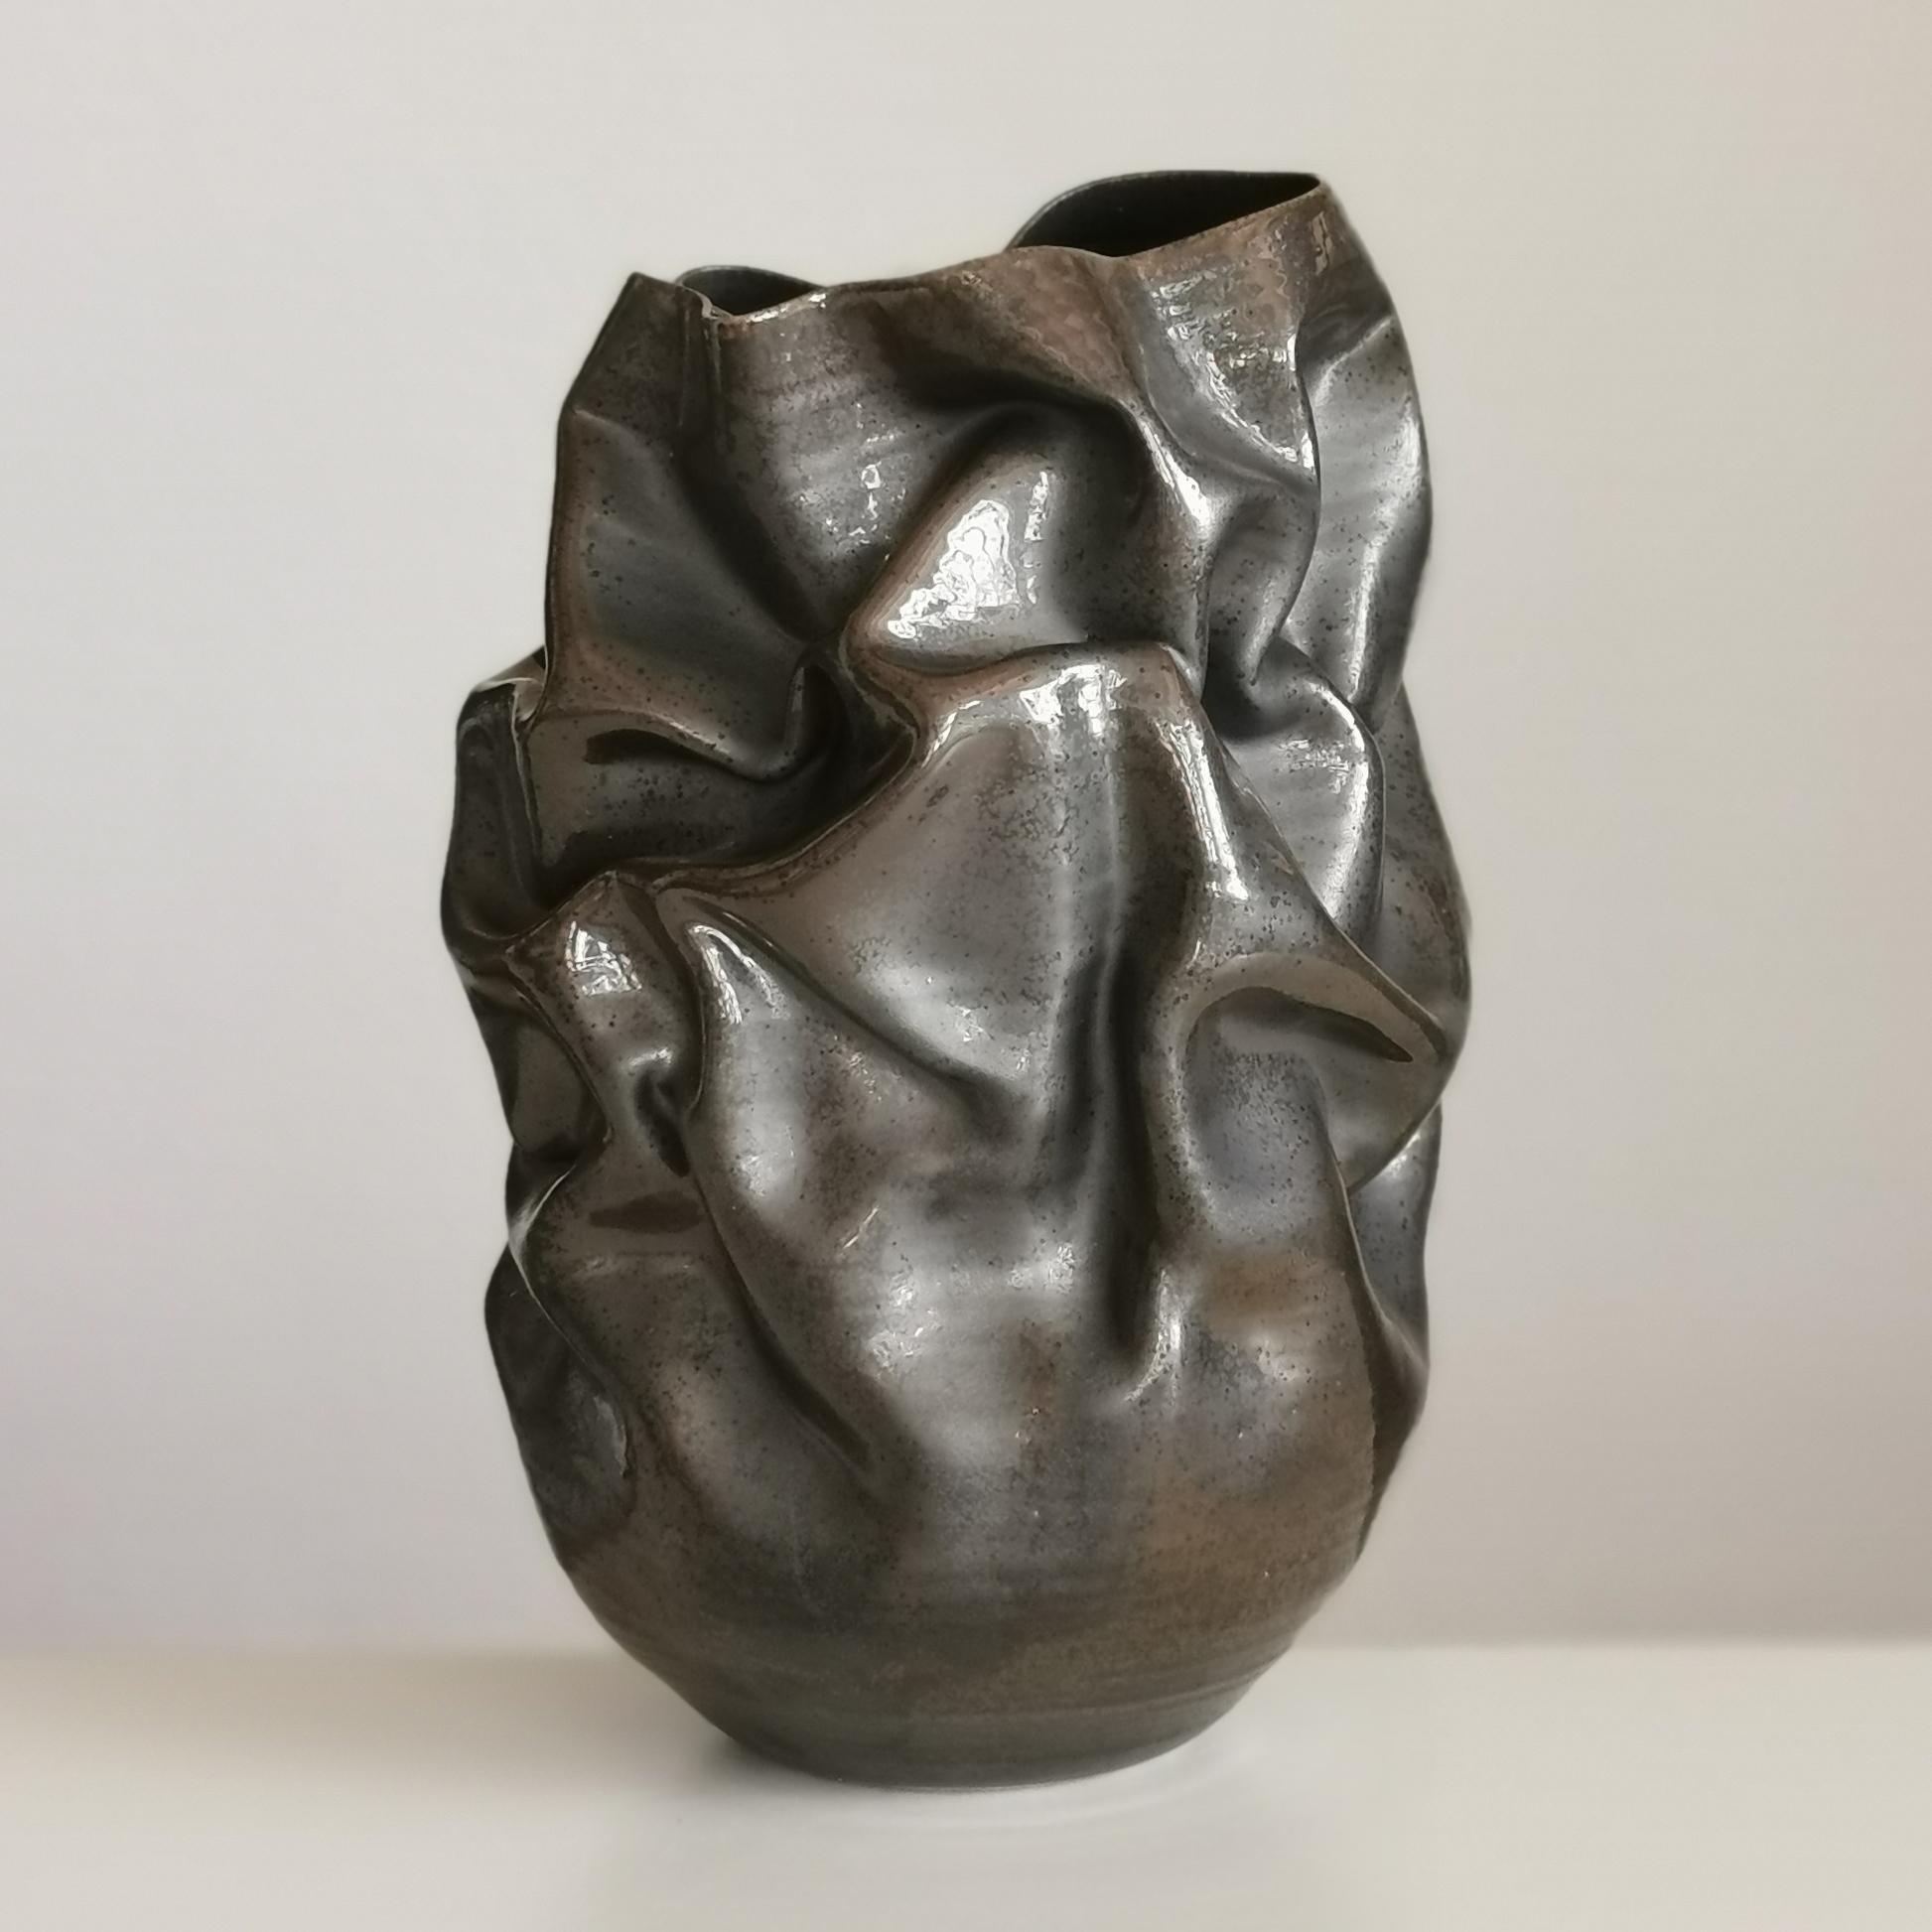 Hand-Crafted Black Metallic Crumpled Form No 32, Ceramic Vessel by Nicholas Arroyave-Portela